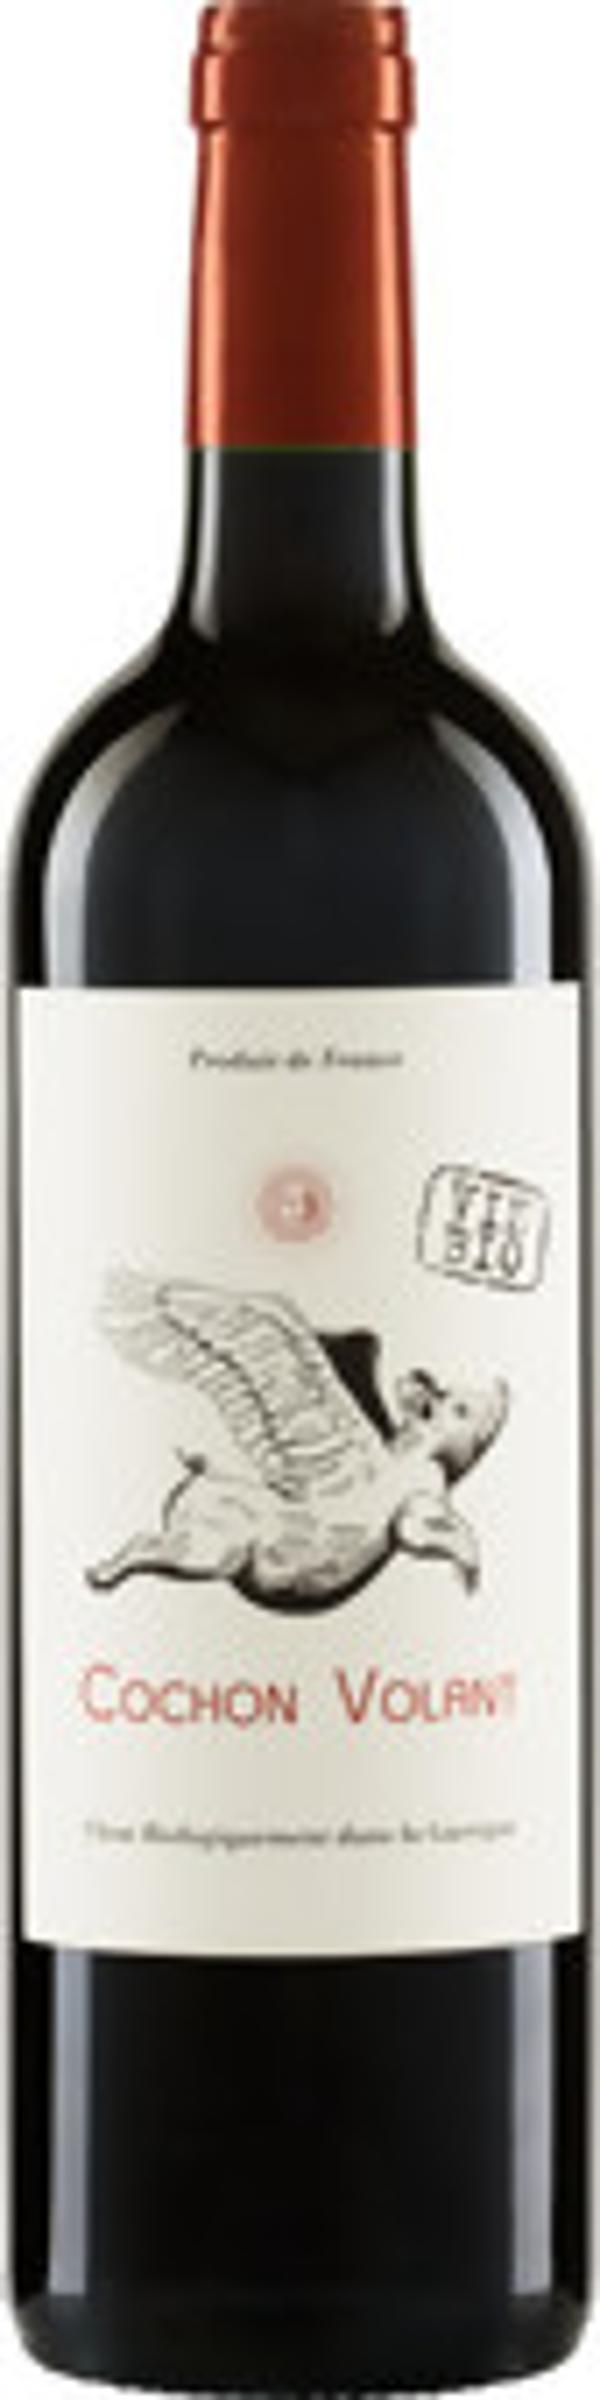 Produktfoto zu COCHON VOLANT Languedoc Rouge